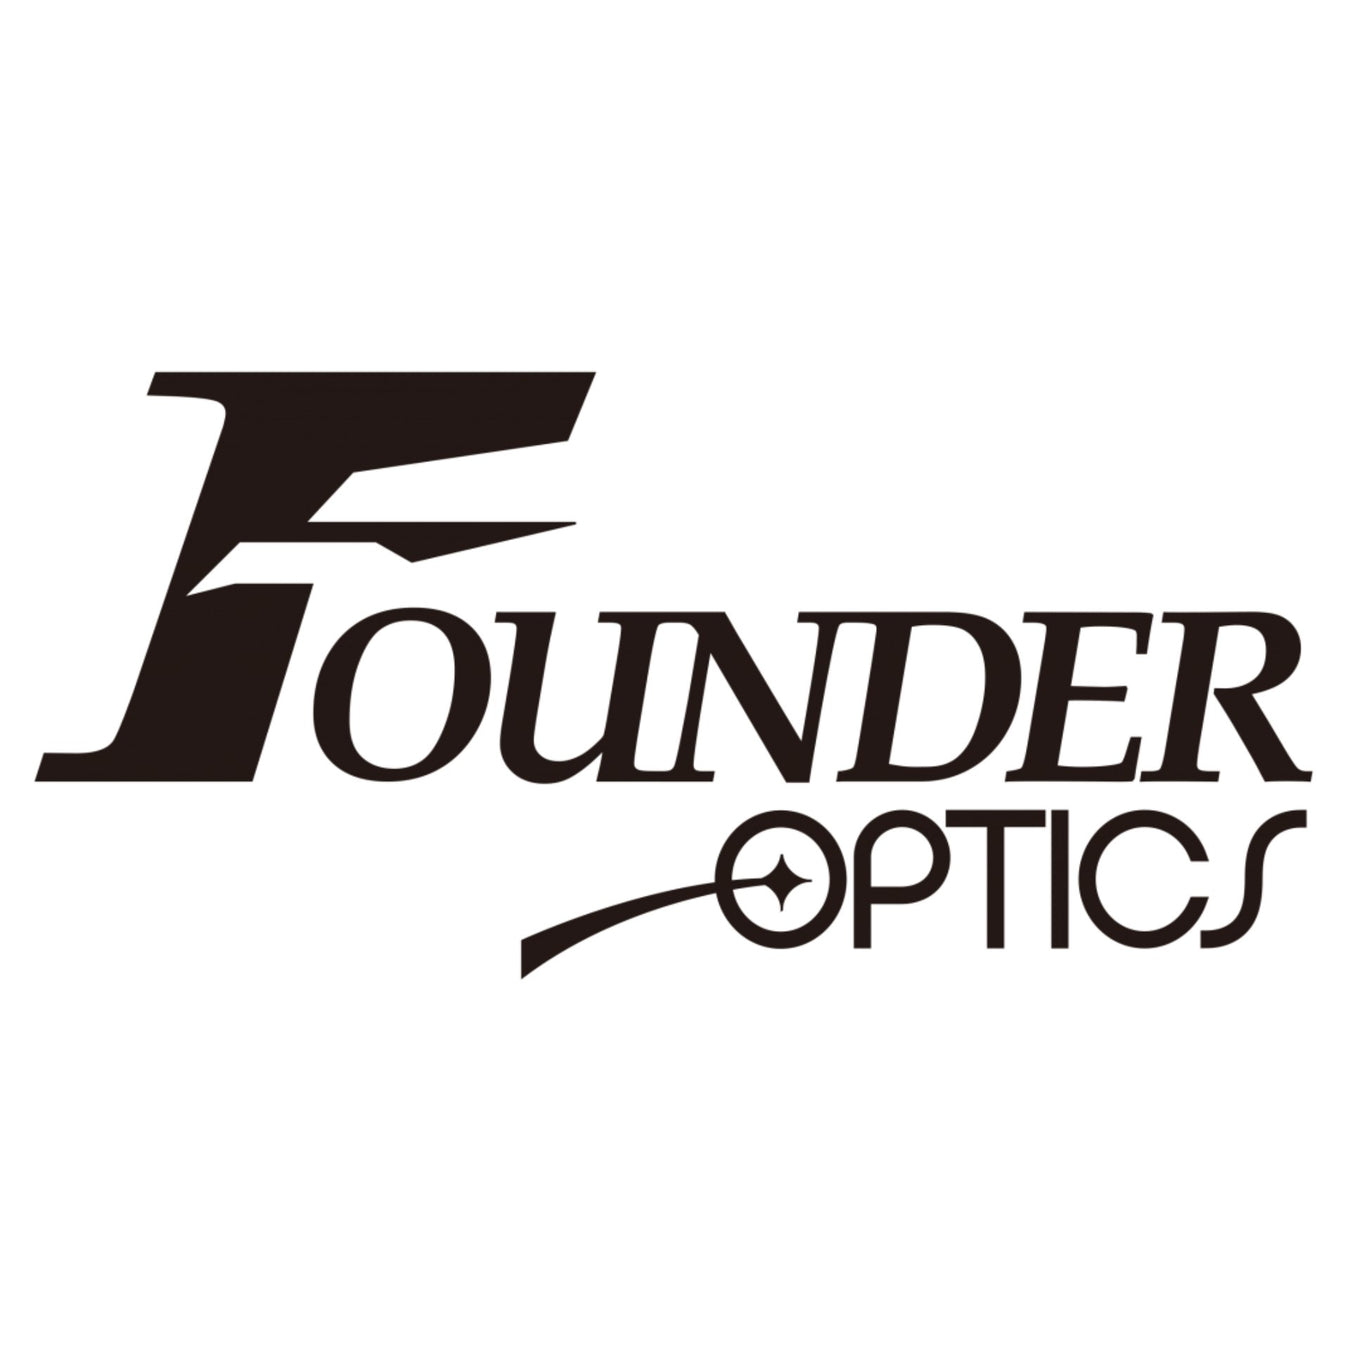 Founder Optics